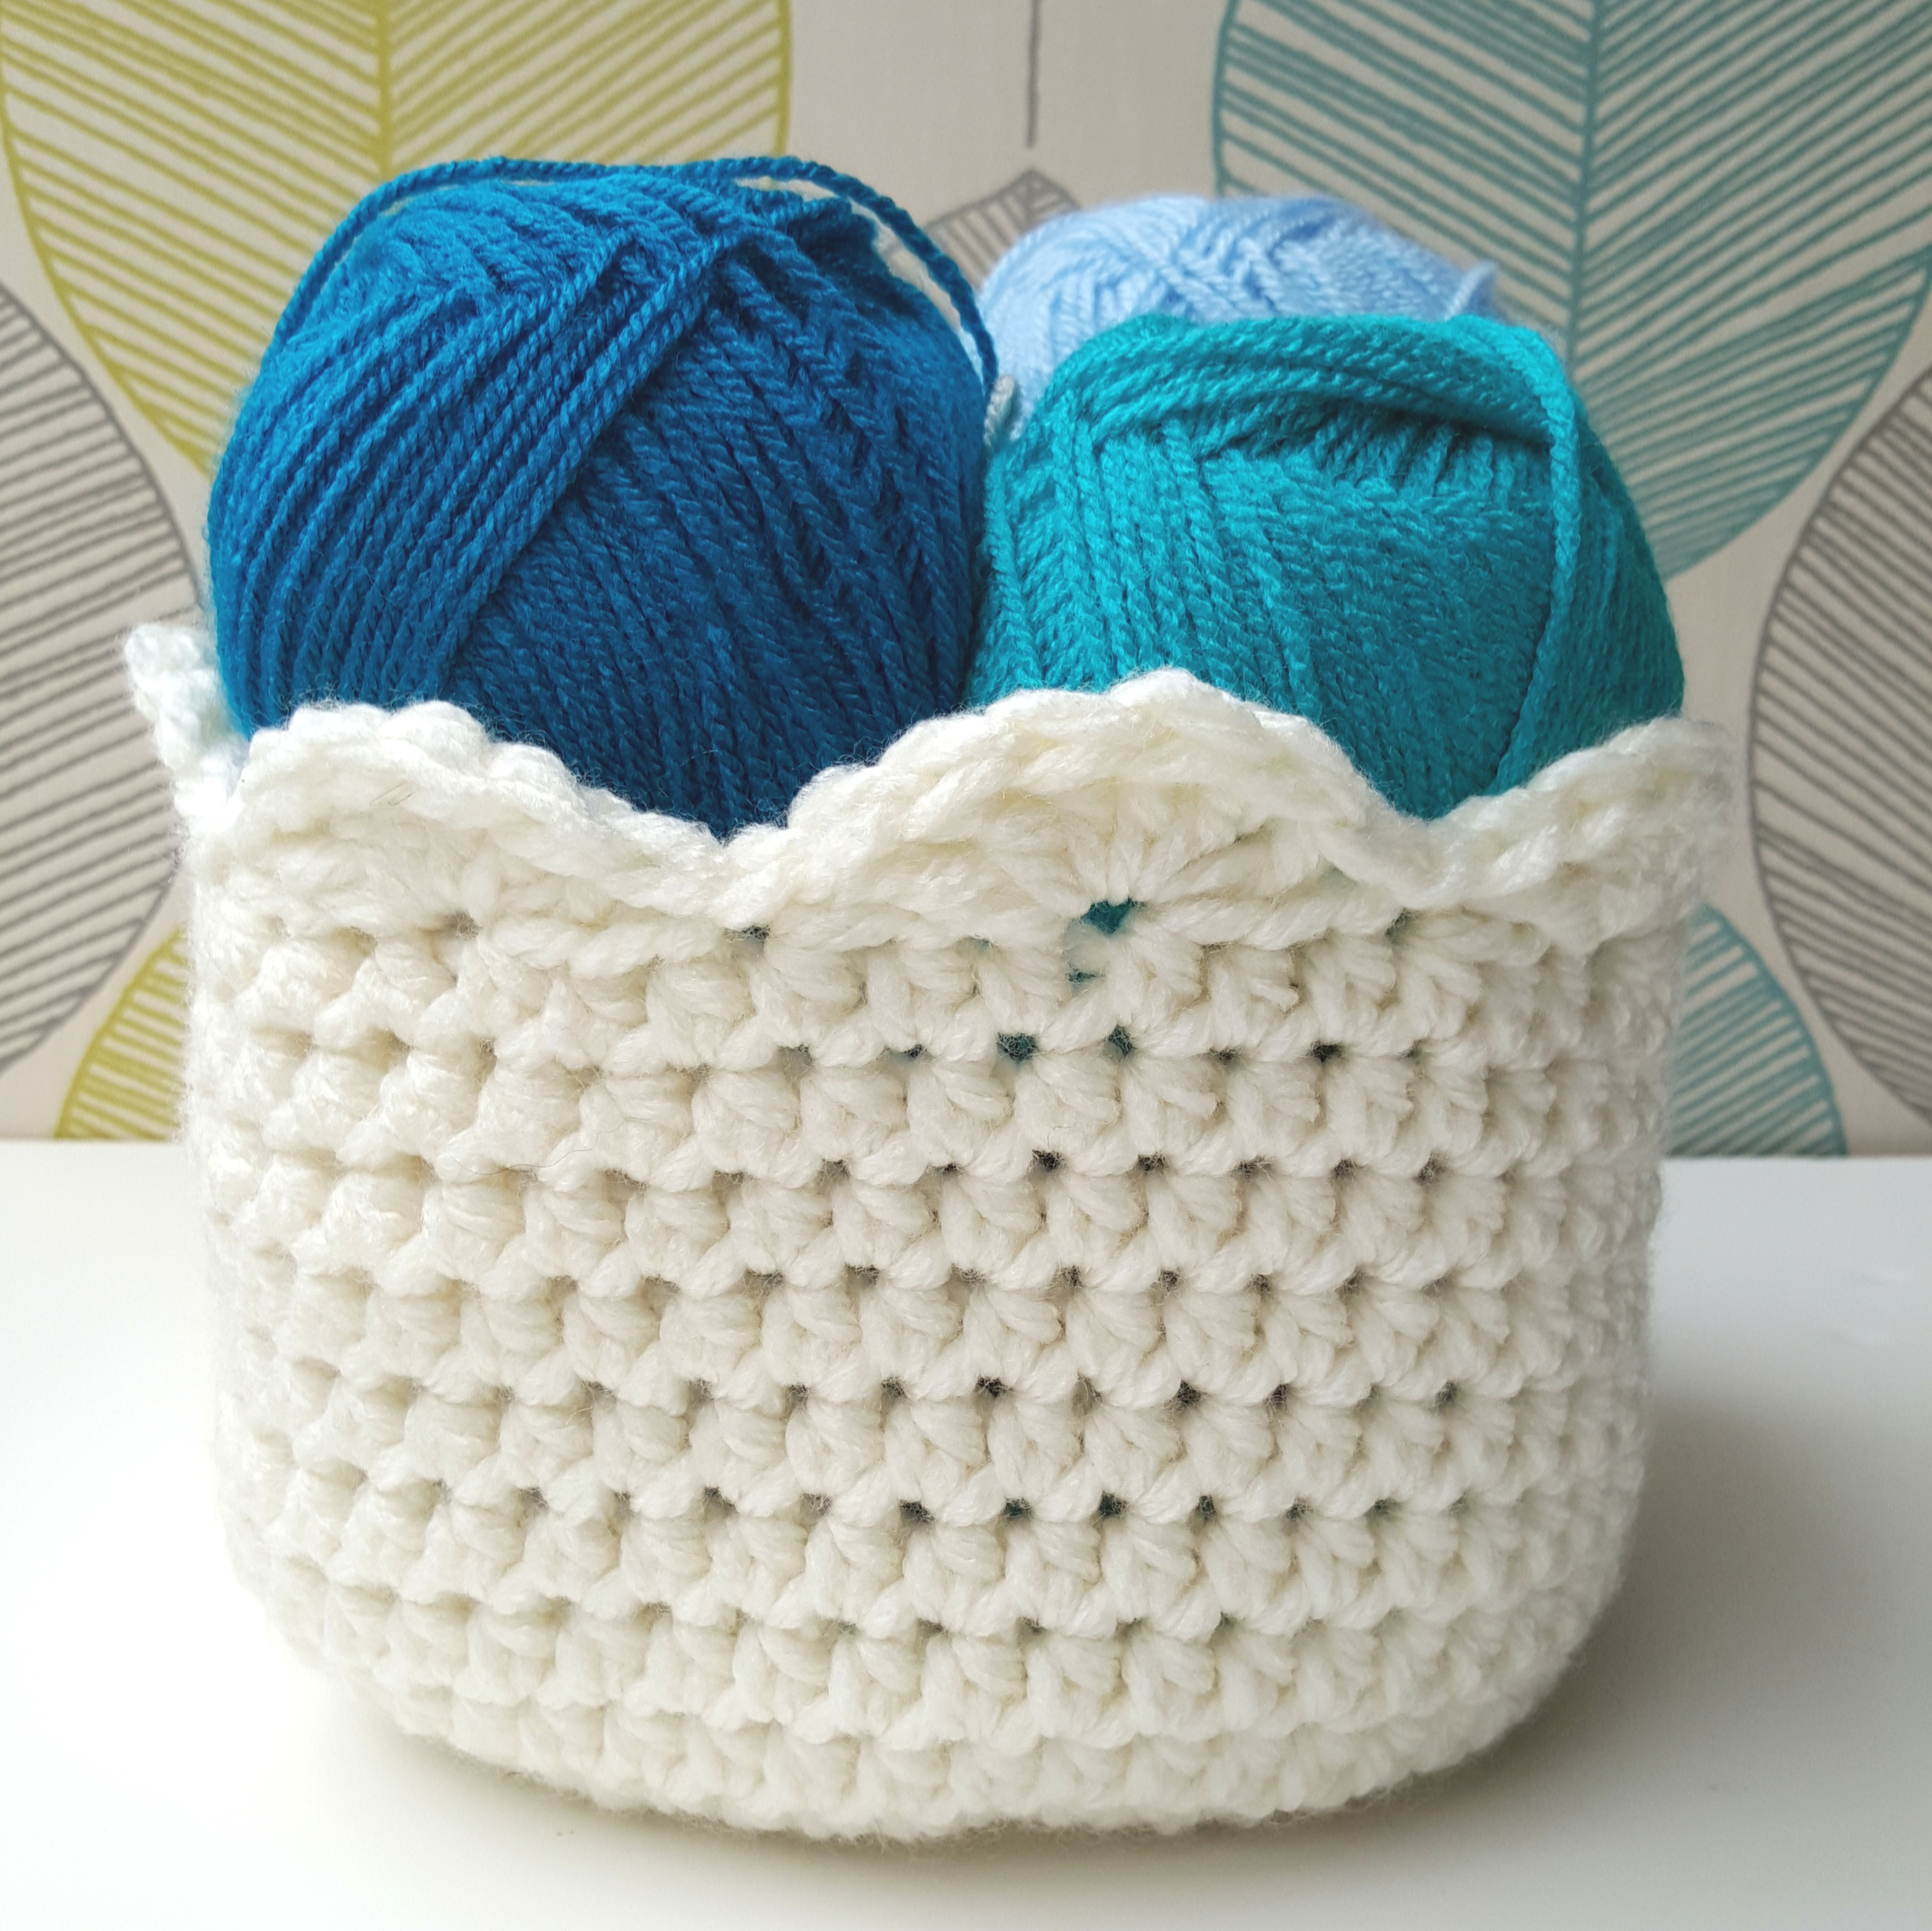 Crochet Baskets Free Patterns How To Crochet A Basket Free Tutorial Pattern